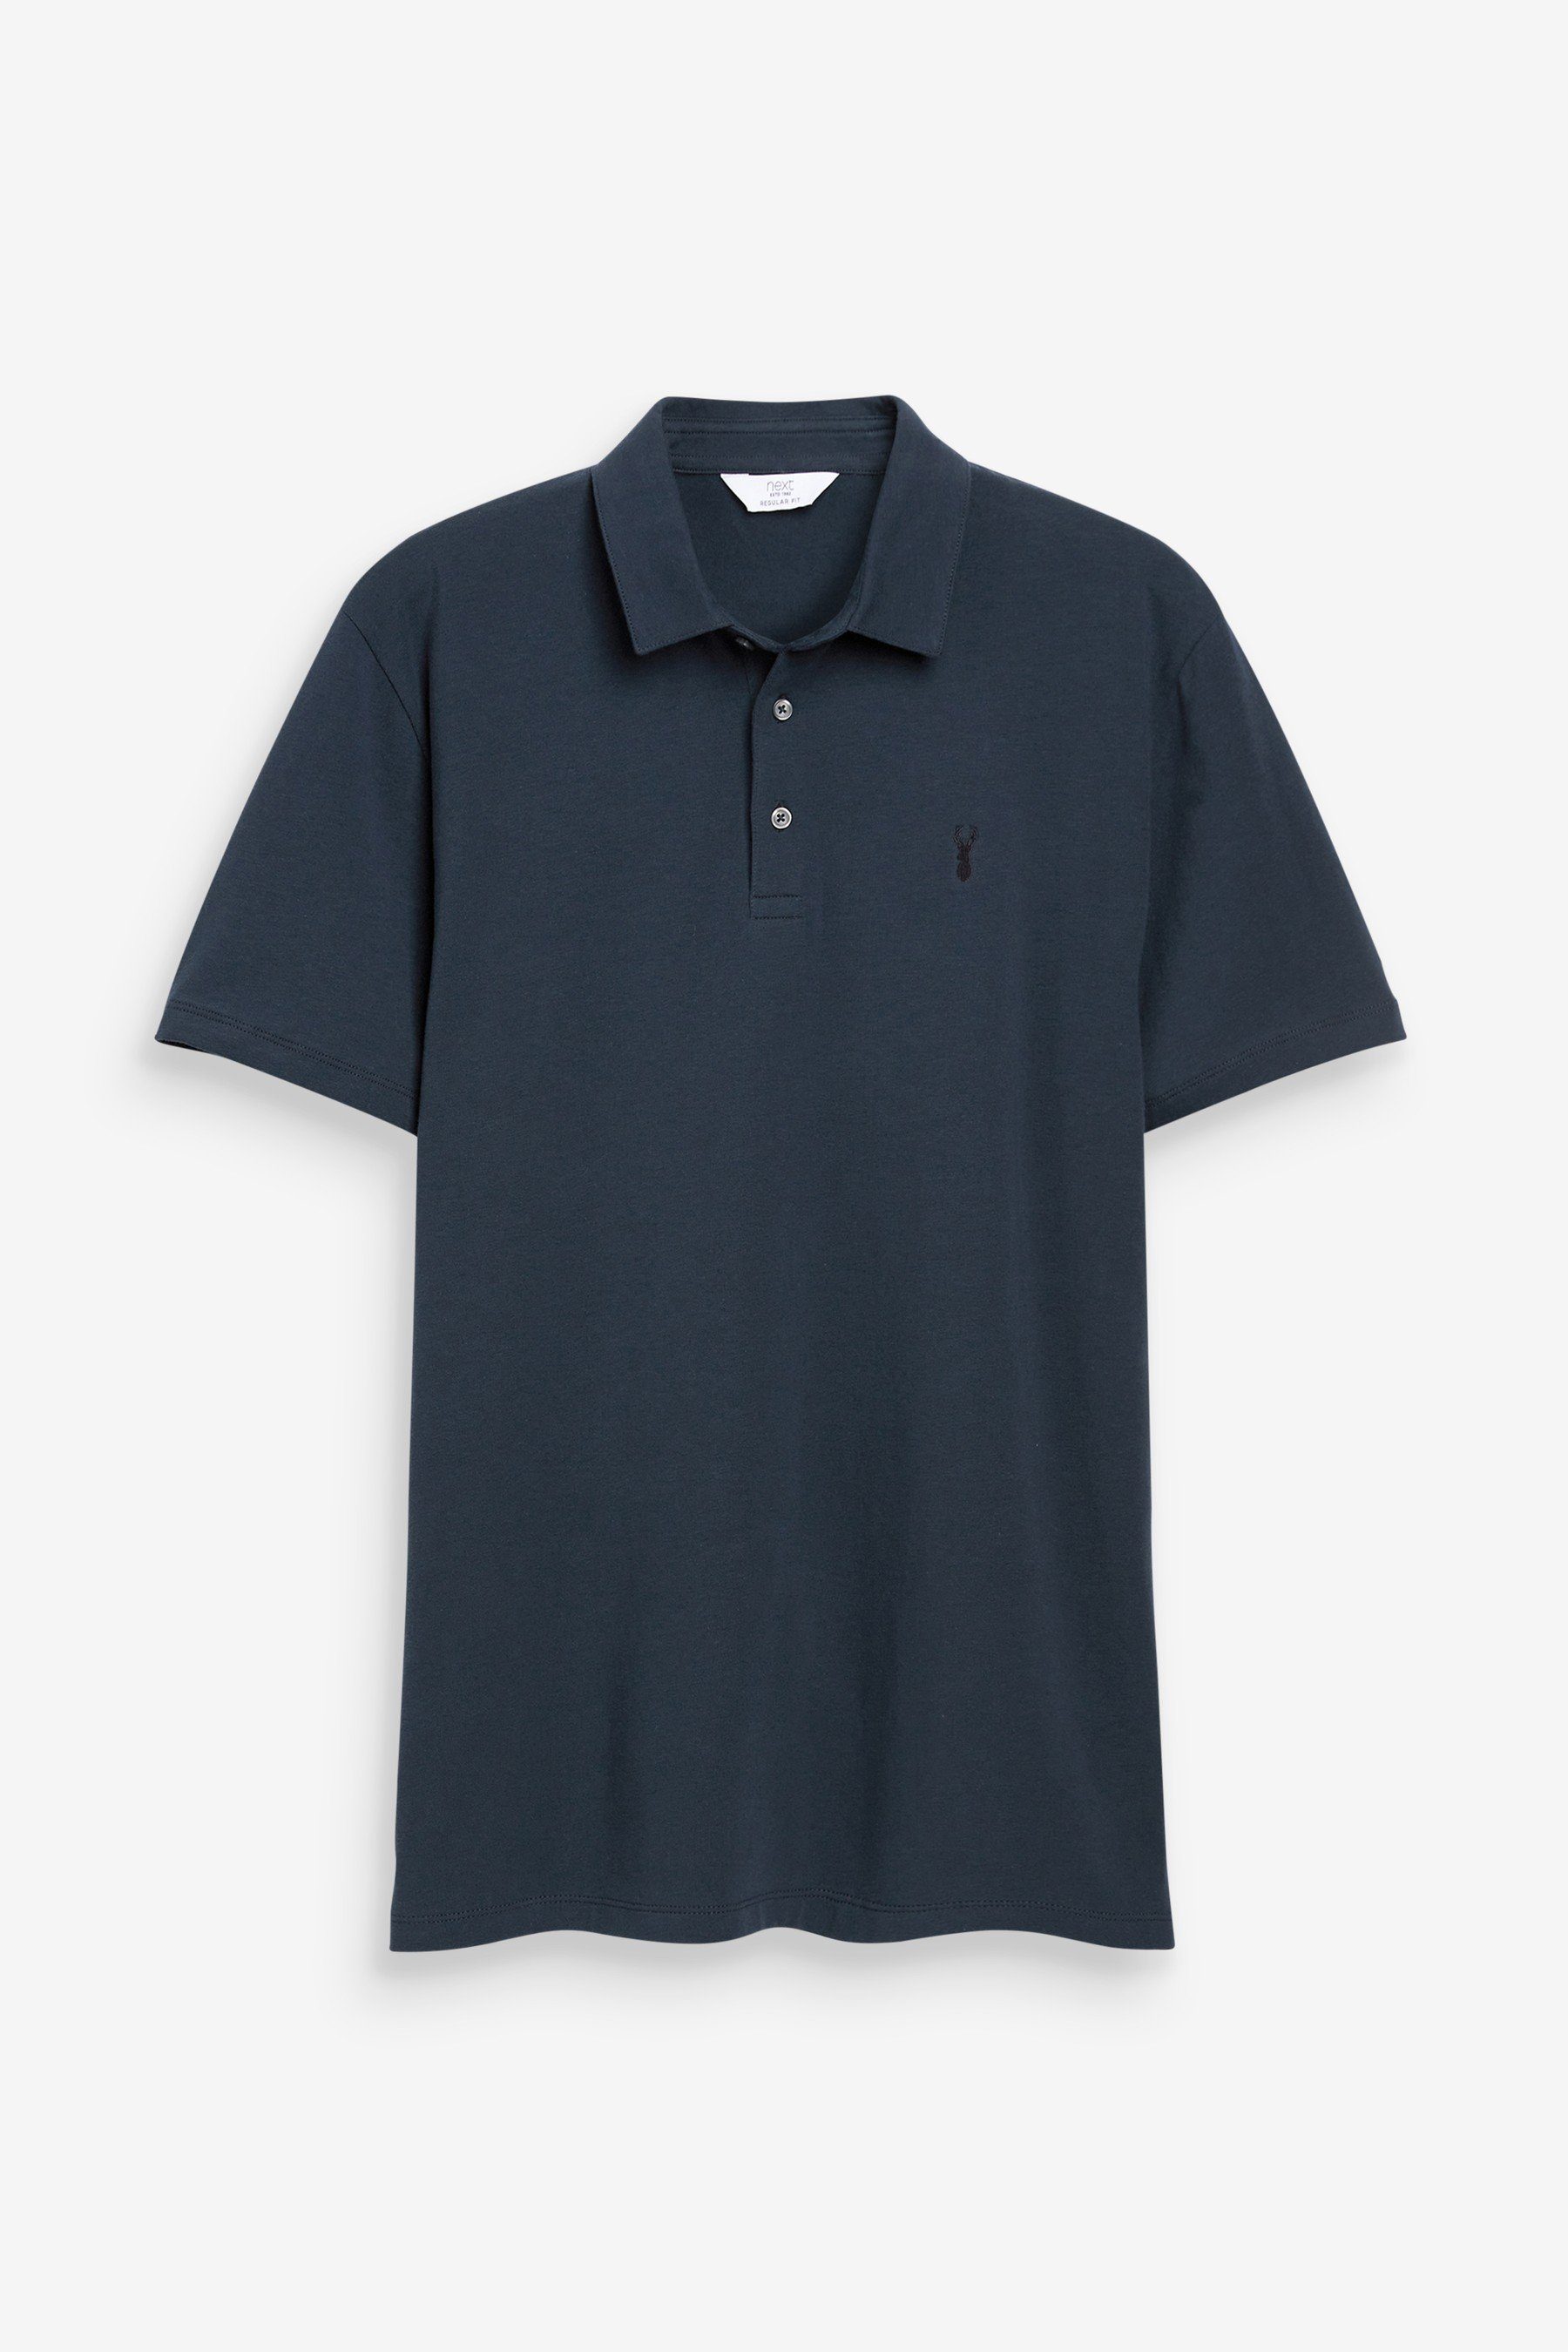 Jersey Poloshirt im aus Poloshirts 3er-Pack (3-tlg) Next Blue/Grey/Black